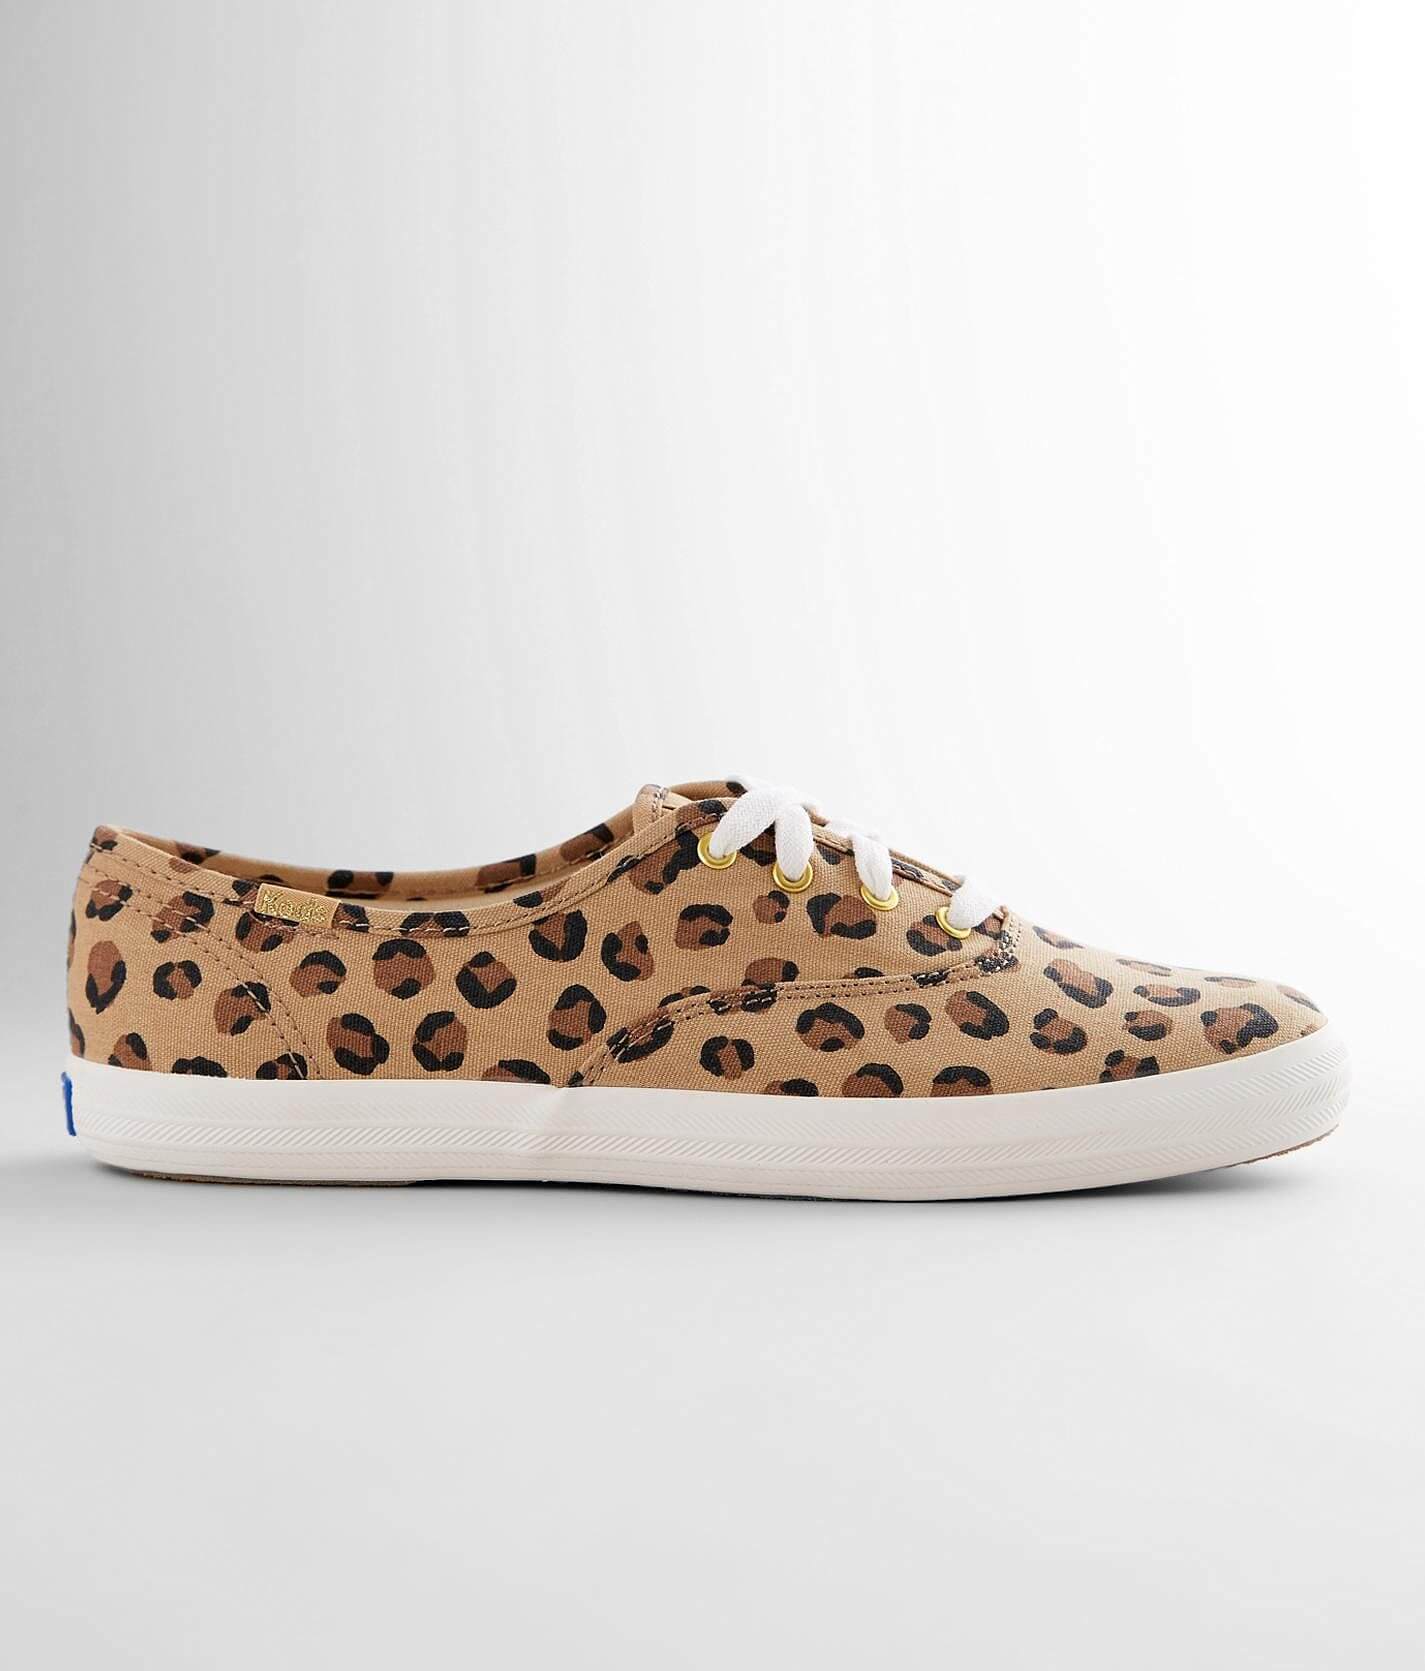 sneakers for women Leopard,Green,Brown - PM001 Leopard Light Brown Metallic  Khaki